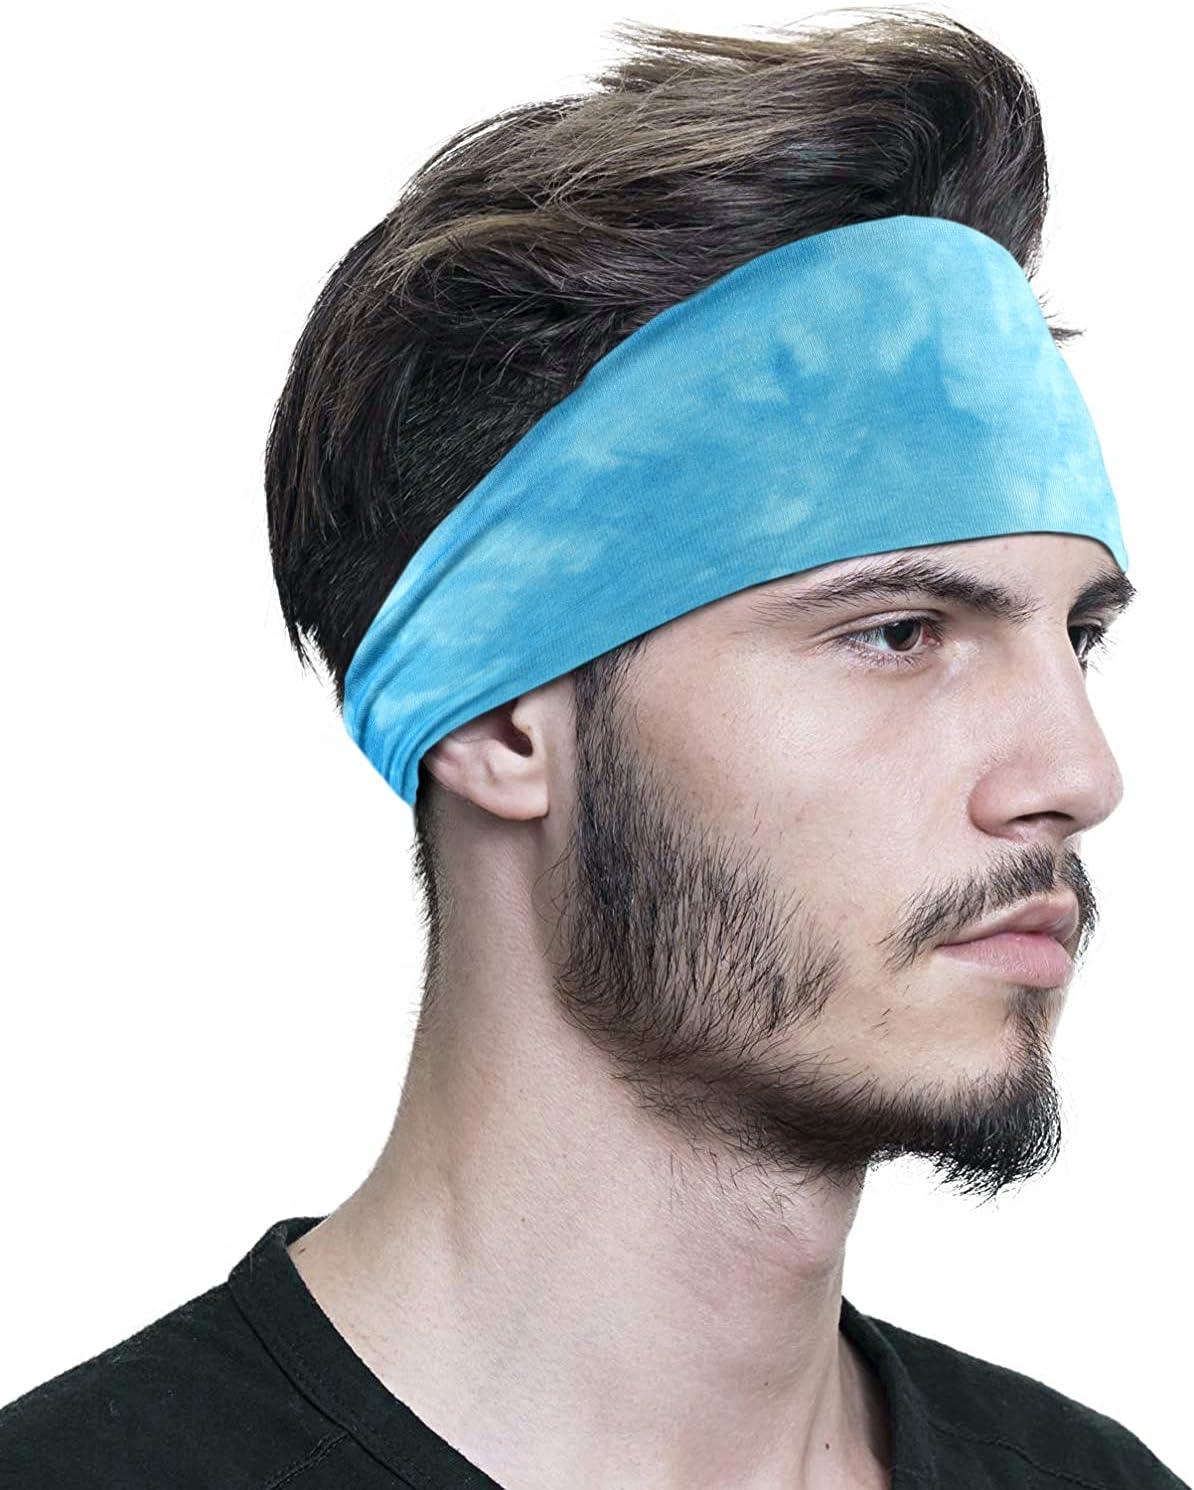 OFFTESTY Sports Headbands for Men 6 Pack, Moisture Wicking